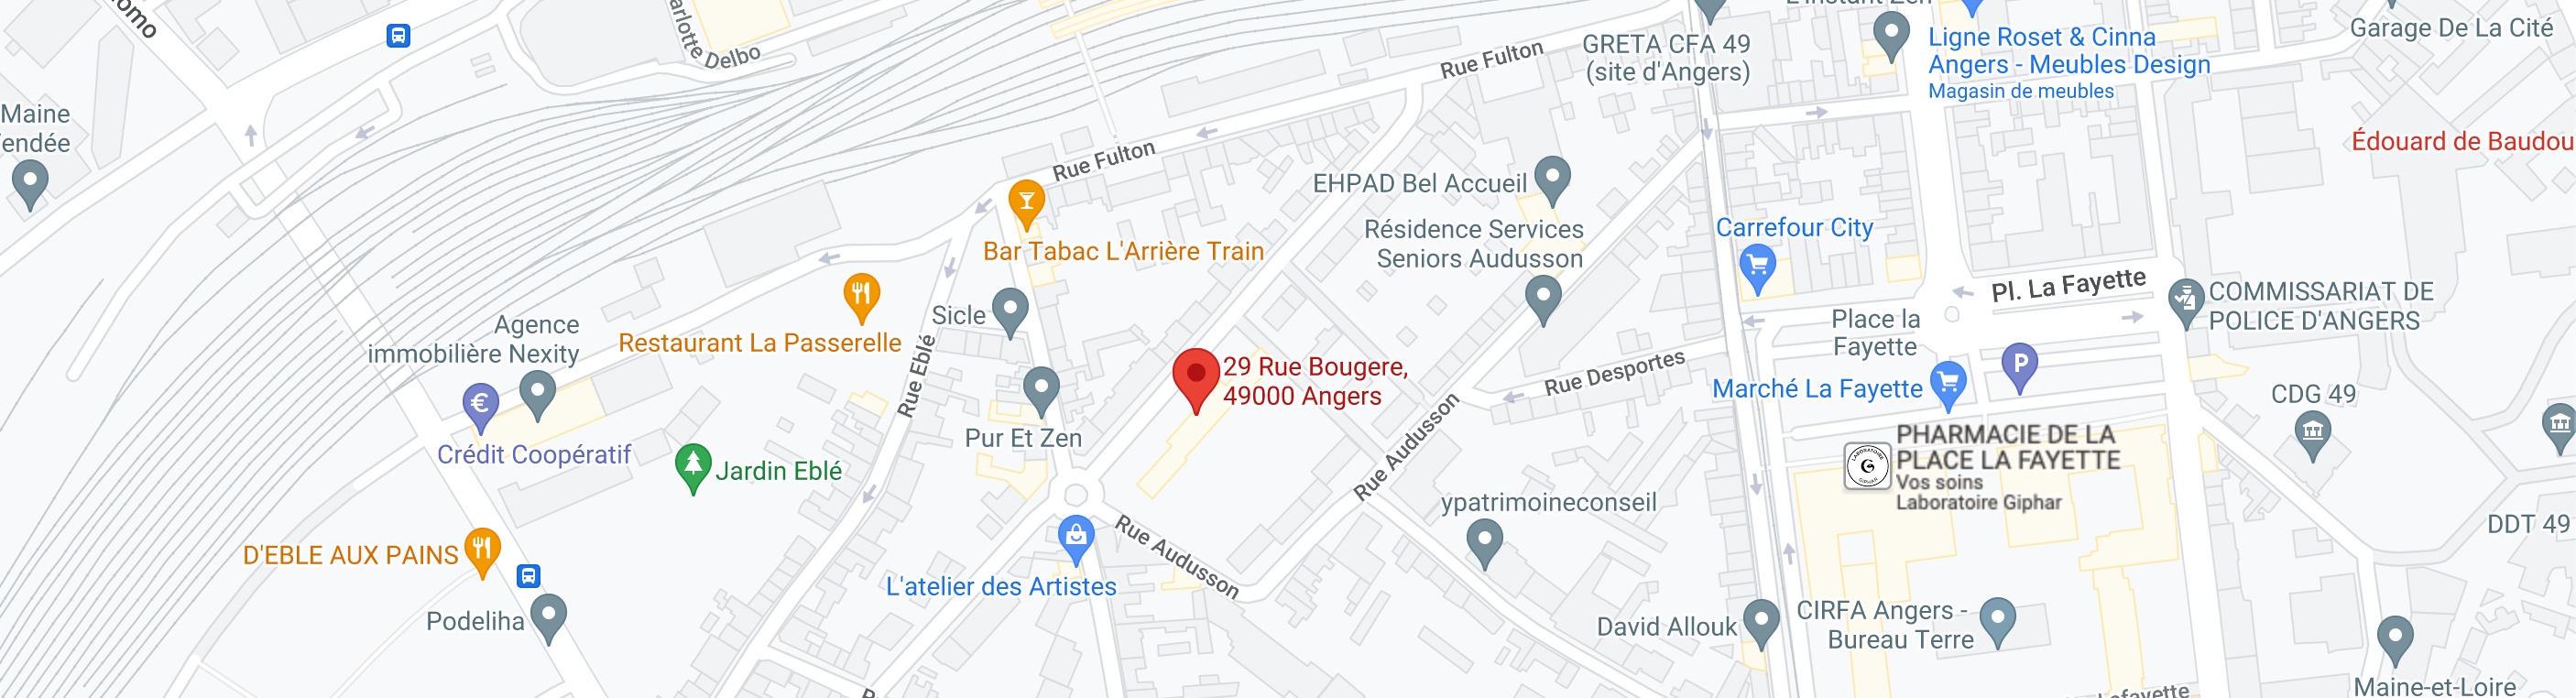 Carte 29 rue Bougère